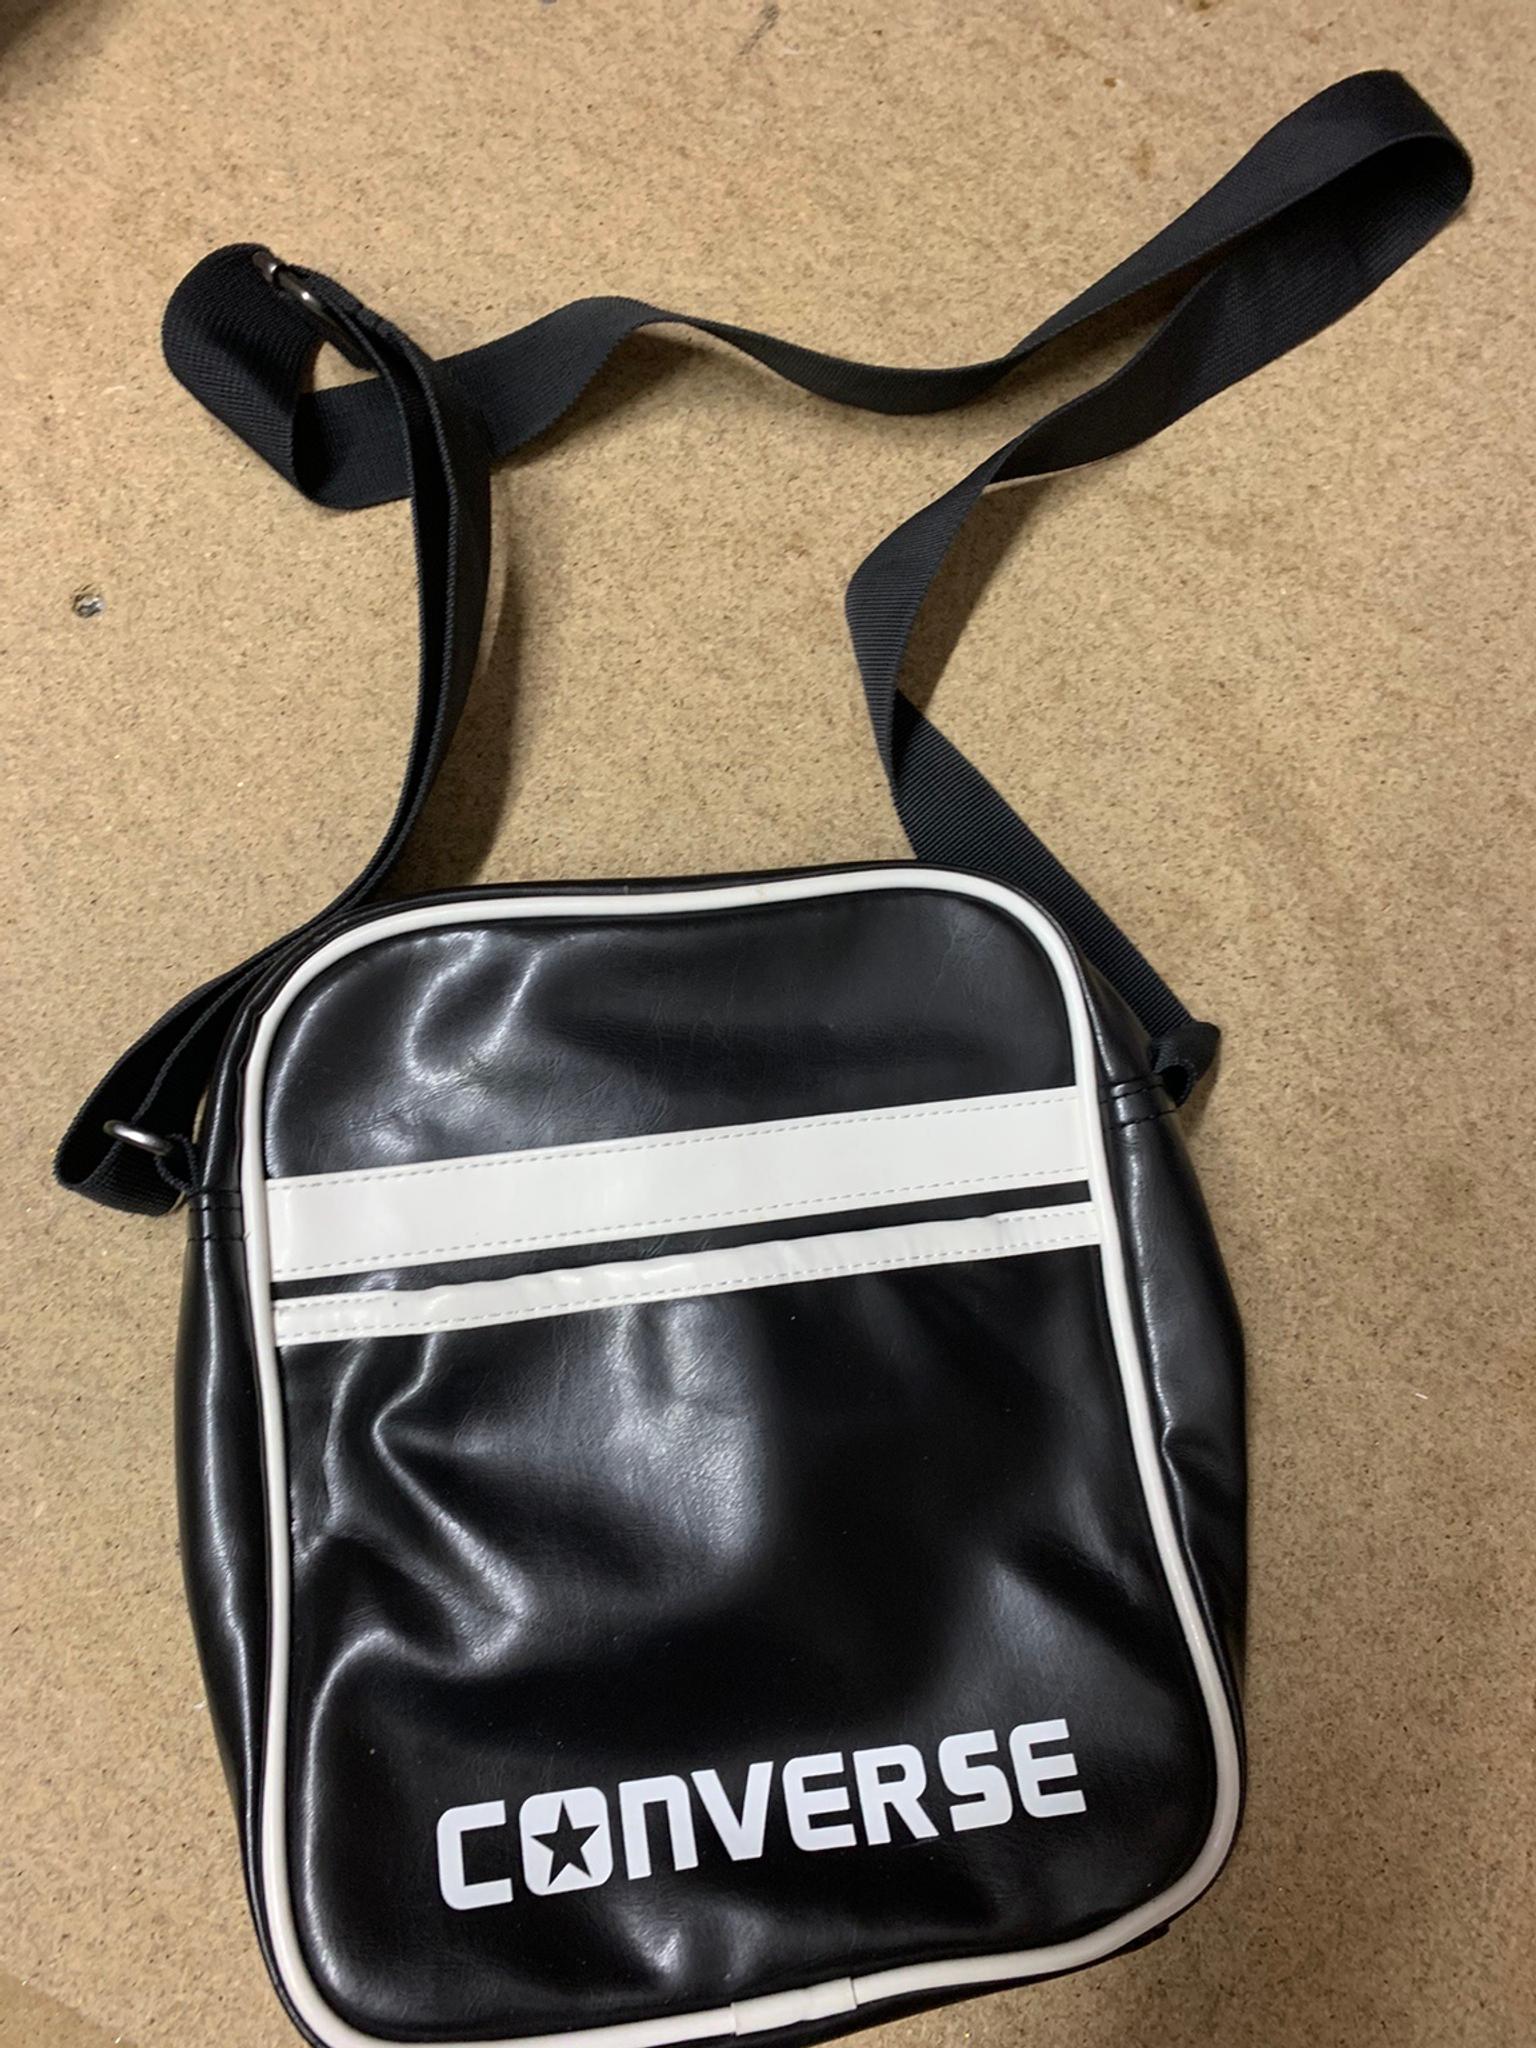 converse side bag